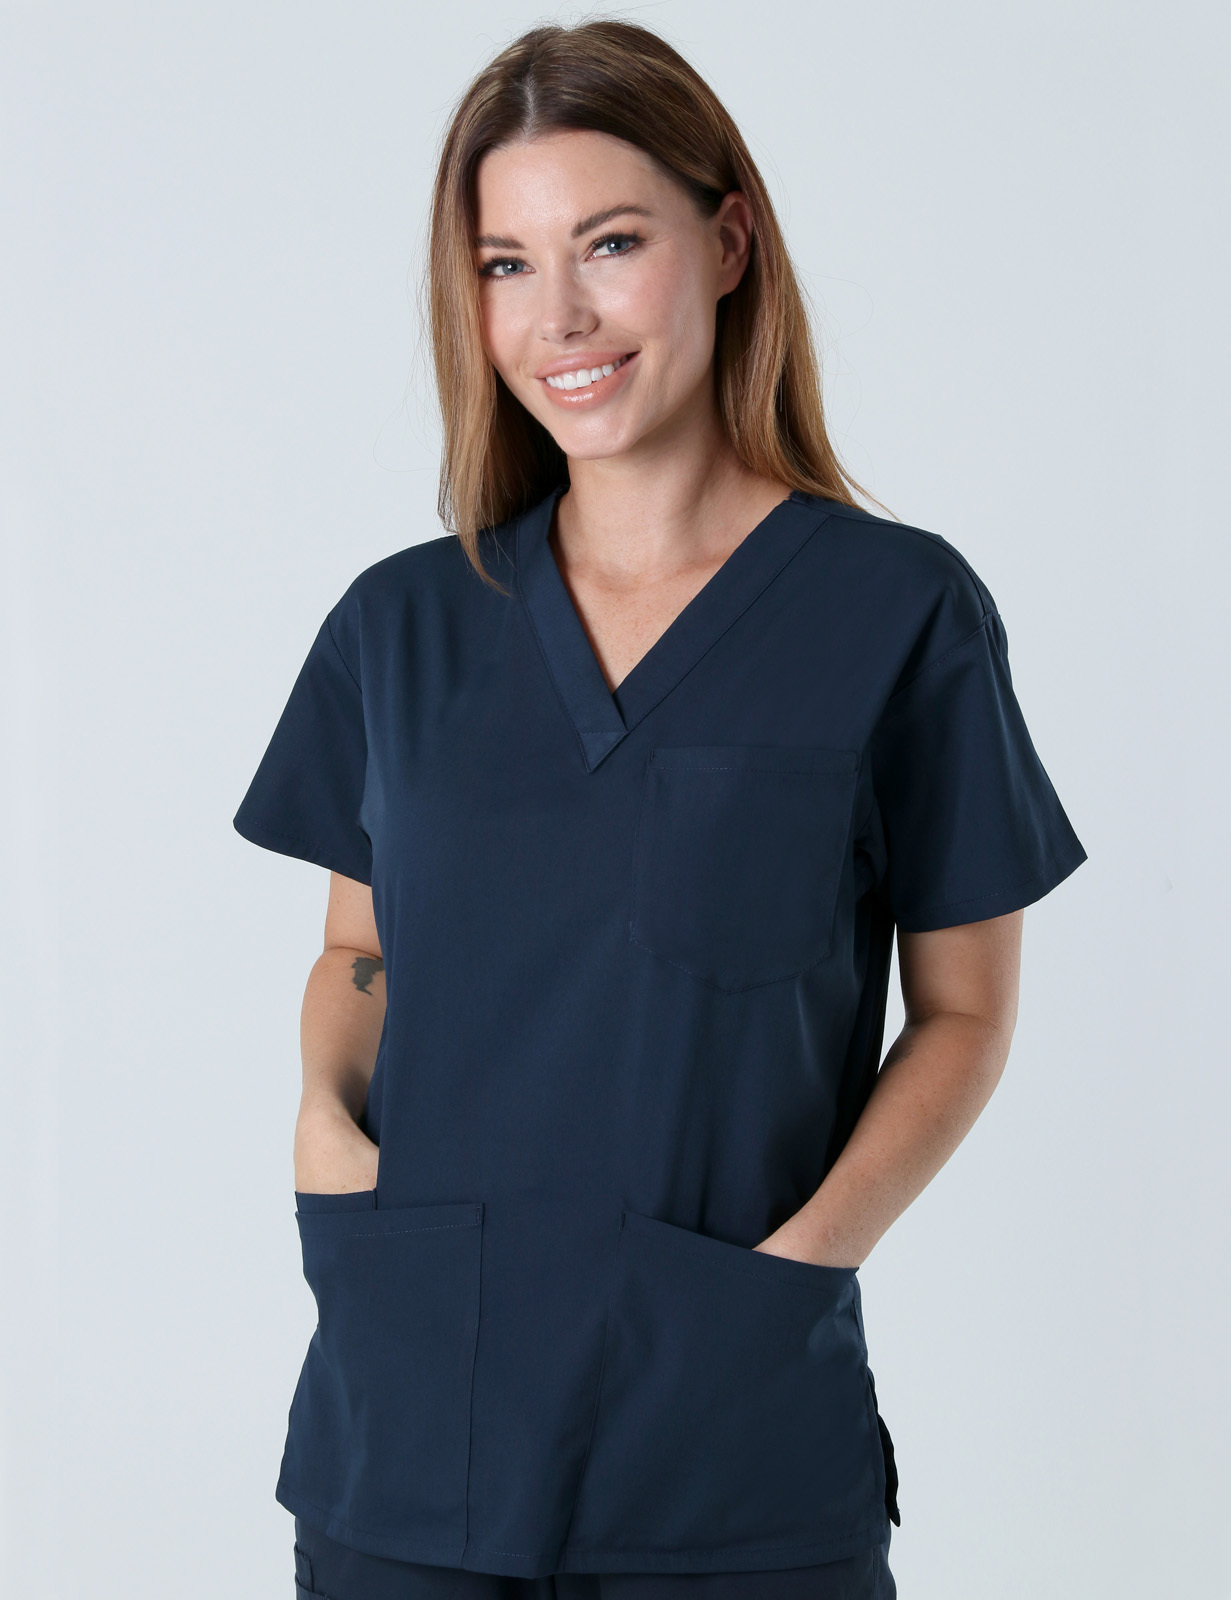 Rockhampton Hospital Clinical Nurse Uniform Set Bundle (4 Pocket Top and Cargo Pants in Navy incl Logos)